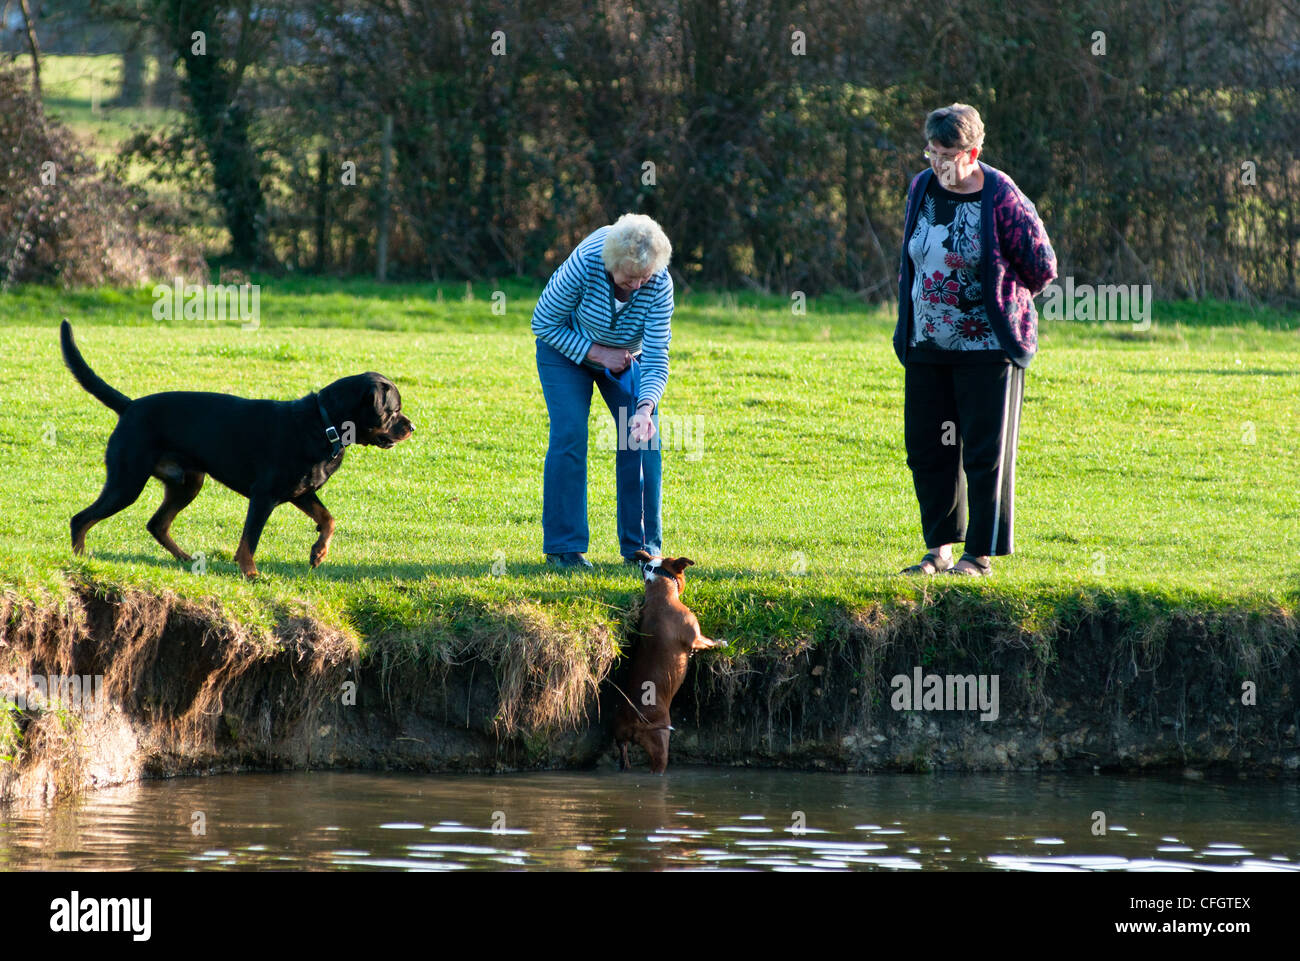 Eine humorvolle Szene entlang des Flusses Cam in der Nähe von Cambridge, Cambridgeshire Stockfoto